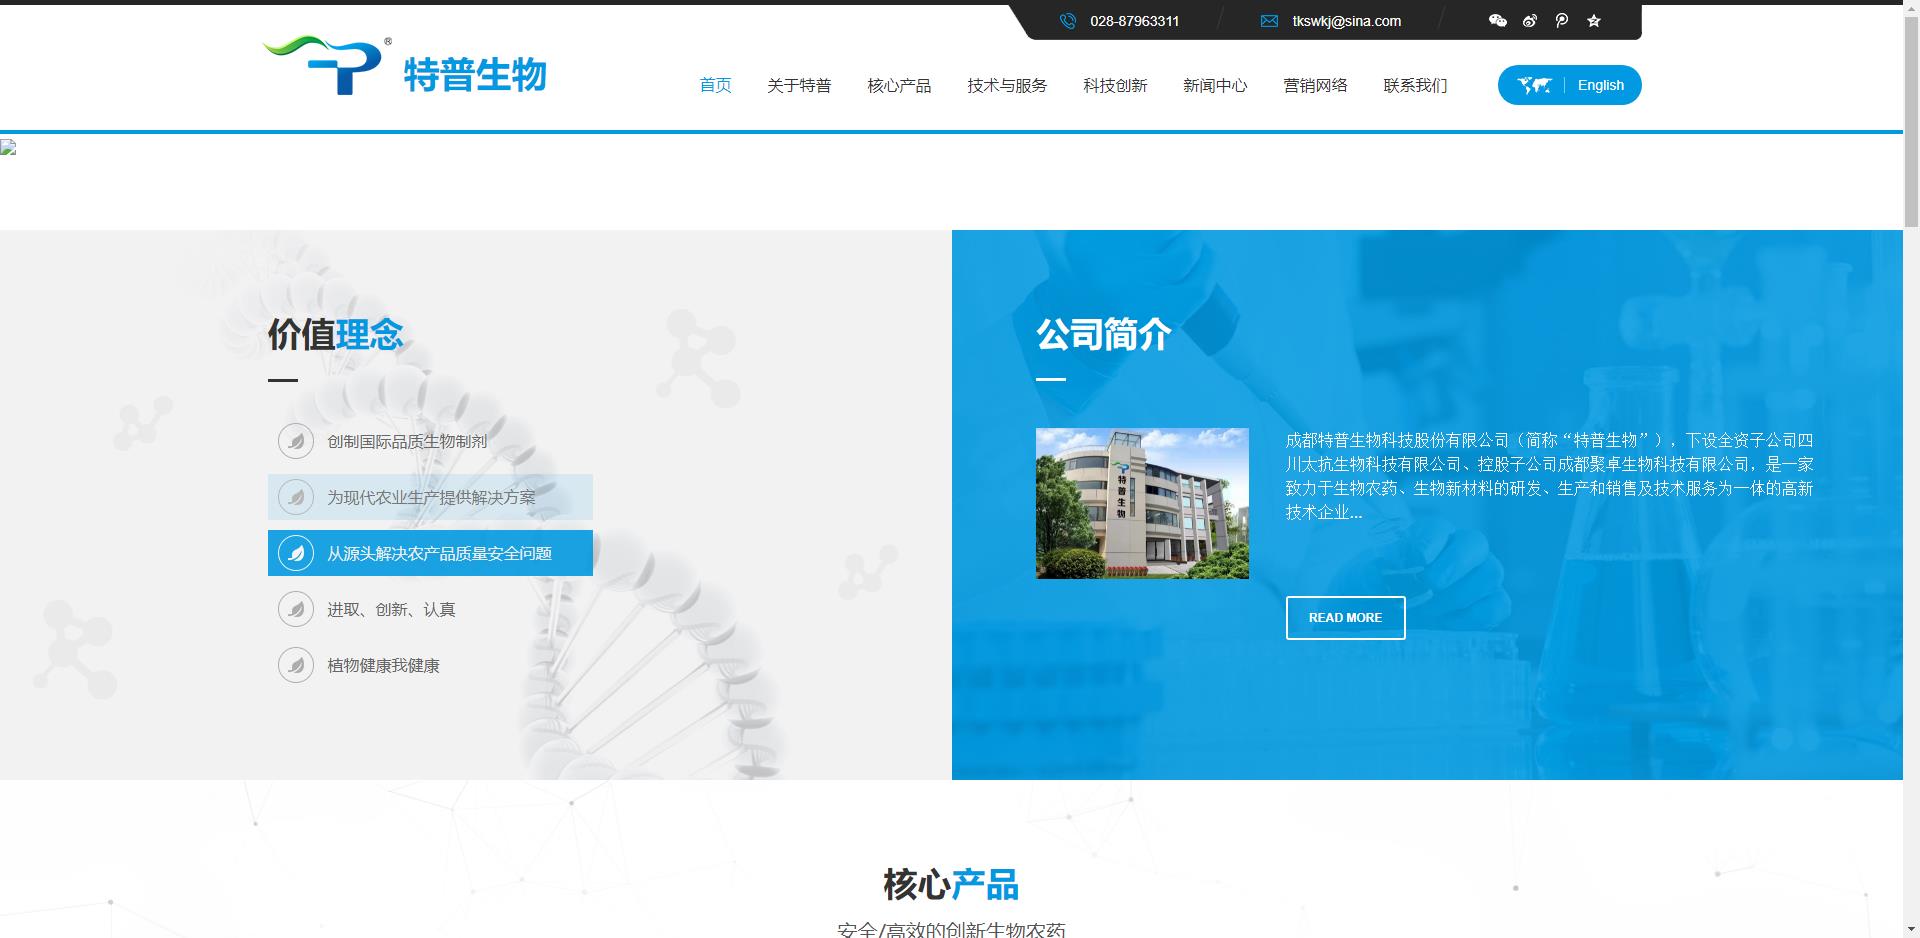 Wanren Technology signed a contract with Shenzhen Xinwanxiang Technology Co., Ltd